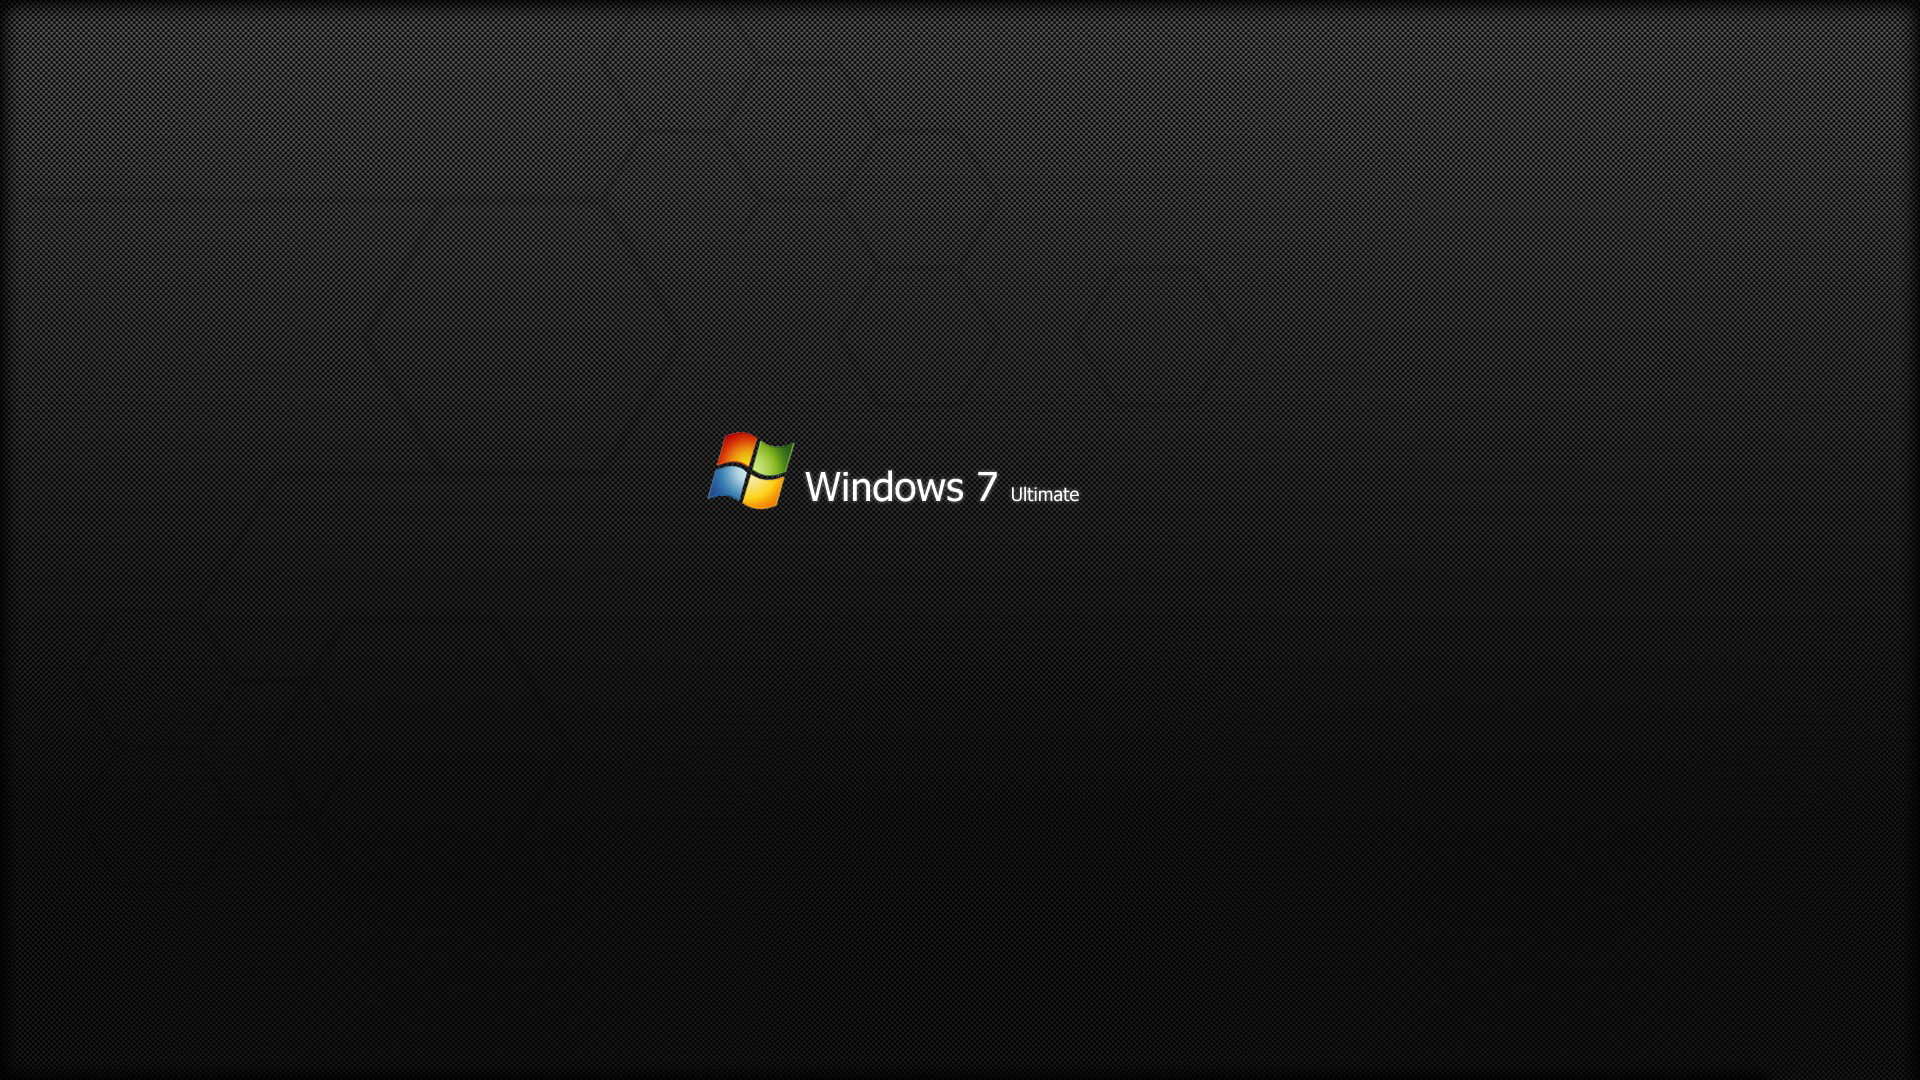 Windows Ultimate Logo Carbon Texture Desktop Wallpaper Uploaded By